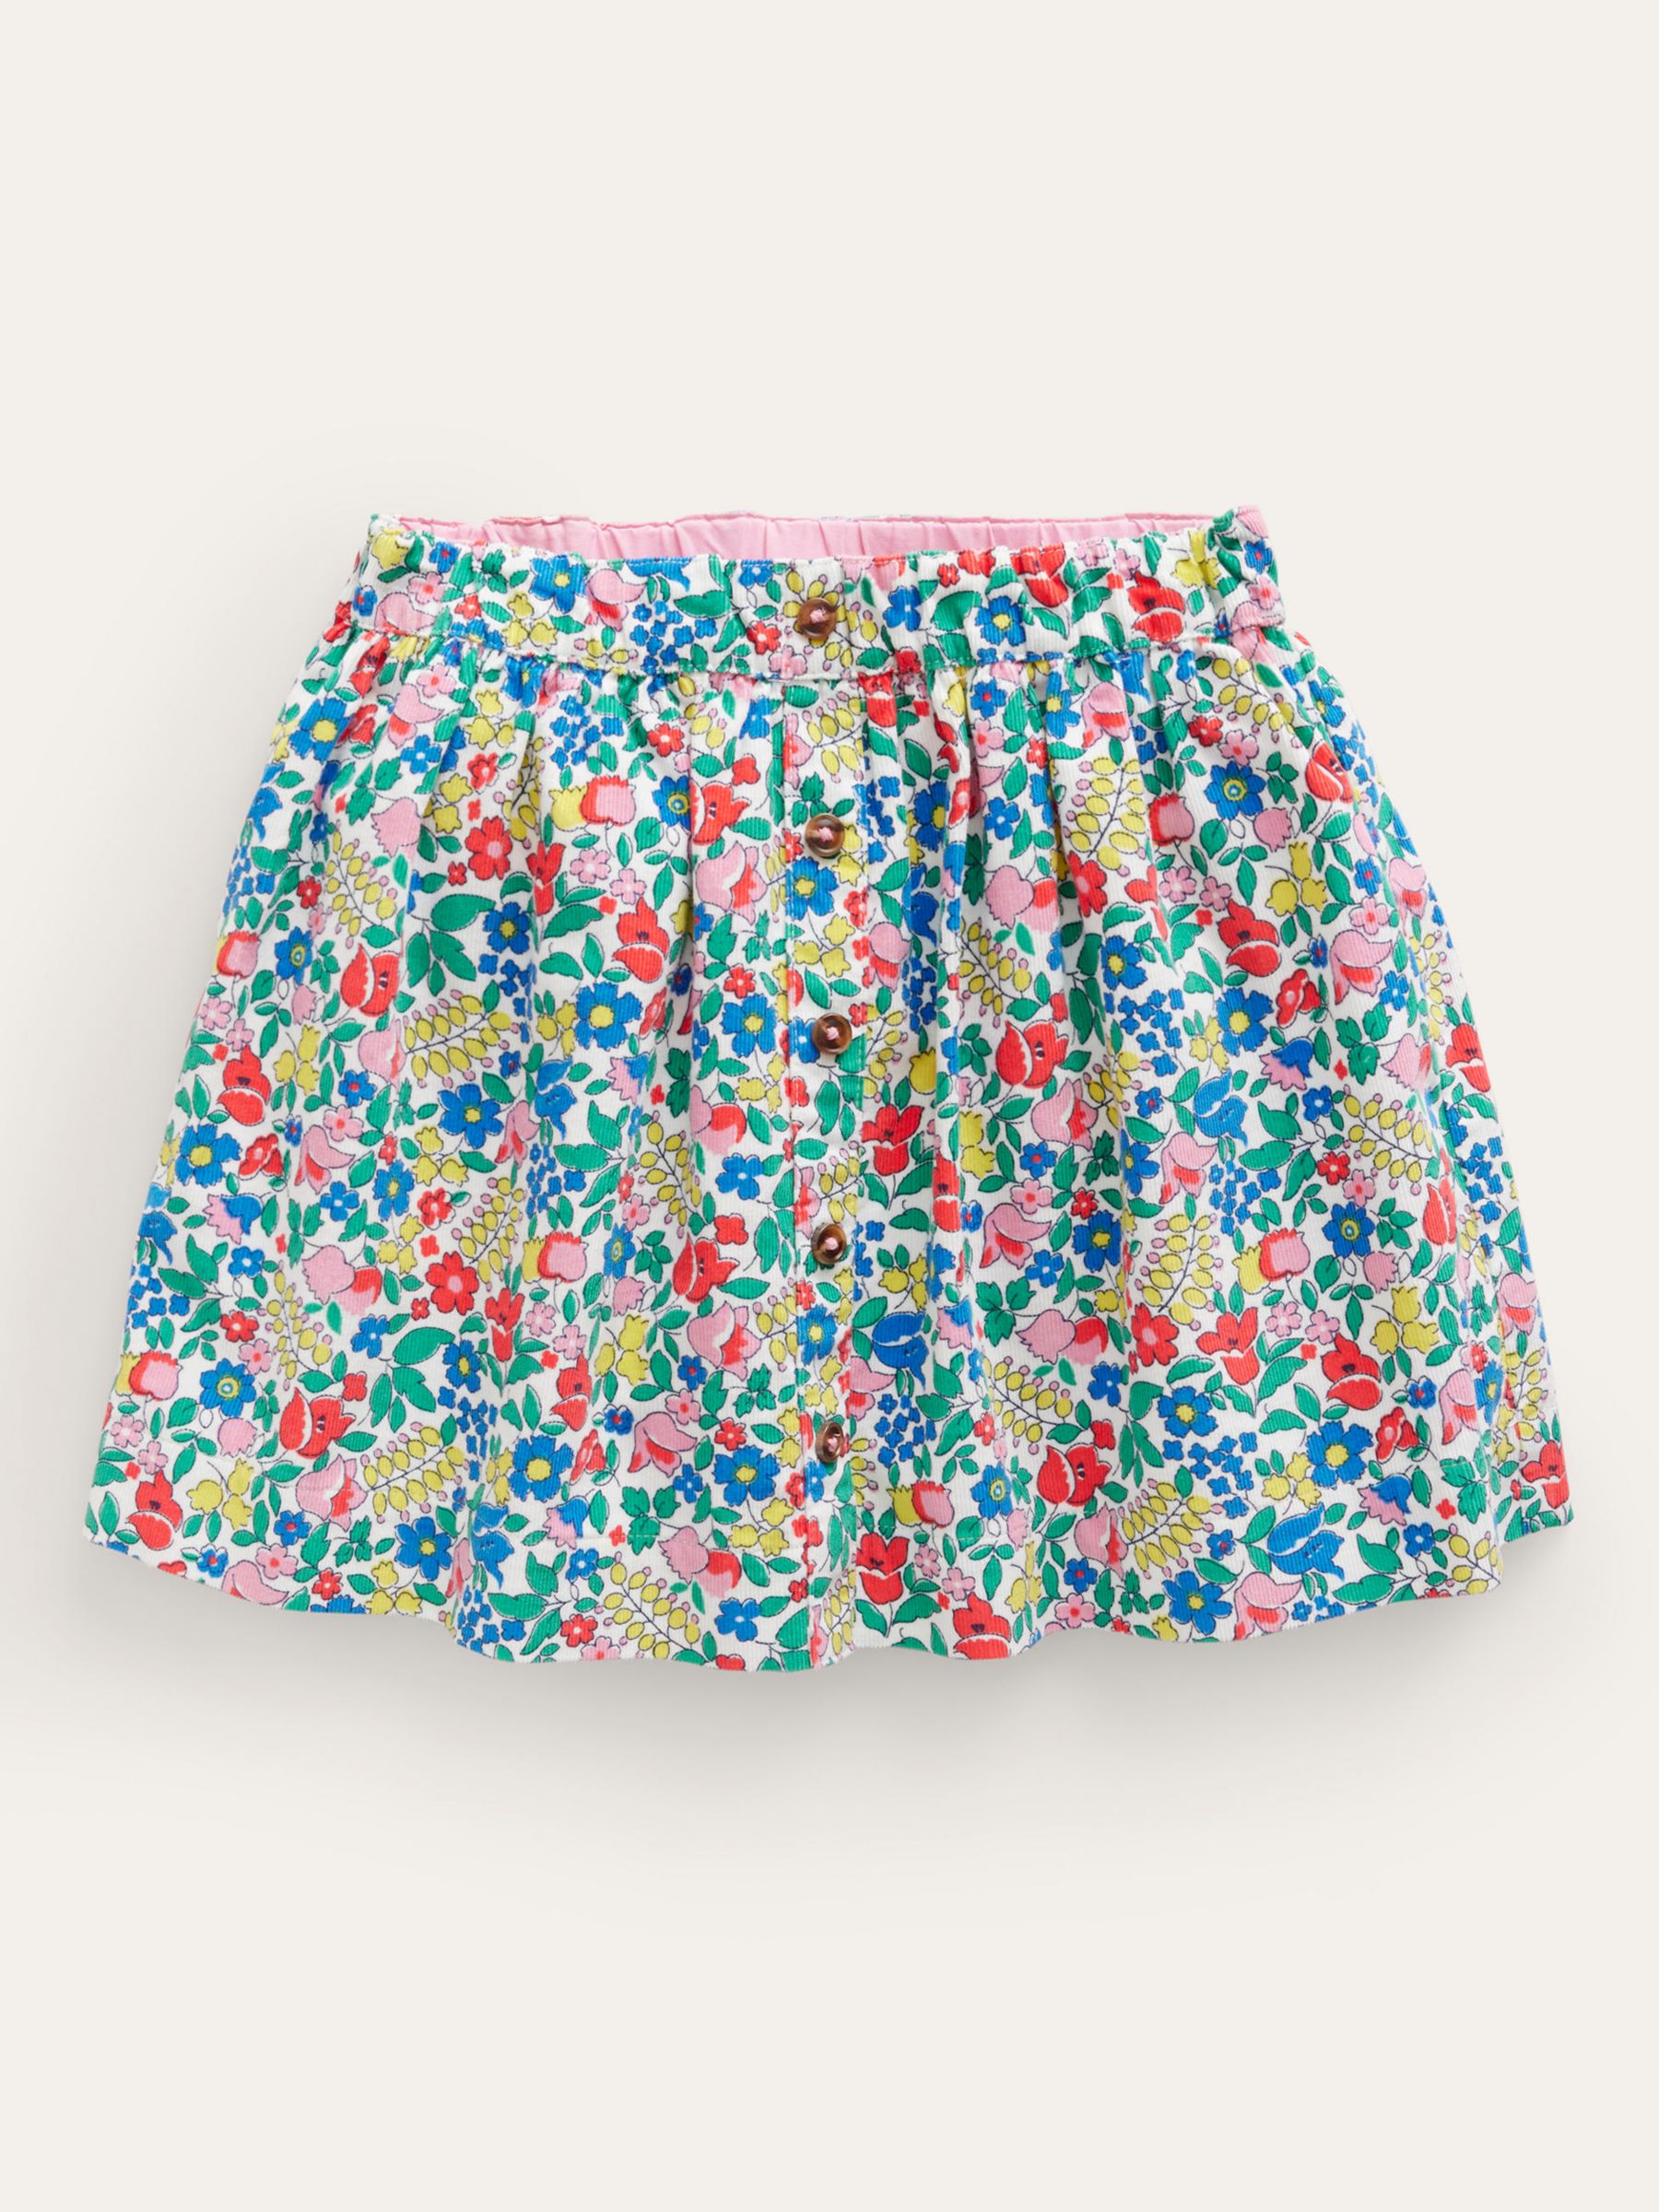 Mini Boden Kids' Floral Cord Twirly Mini Skirt, Multi, 11-12 years